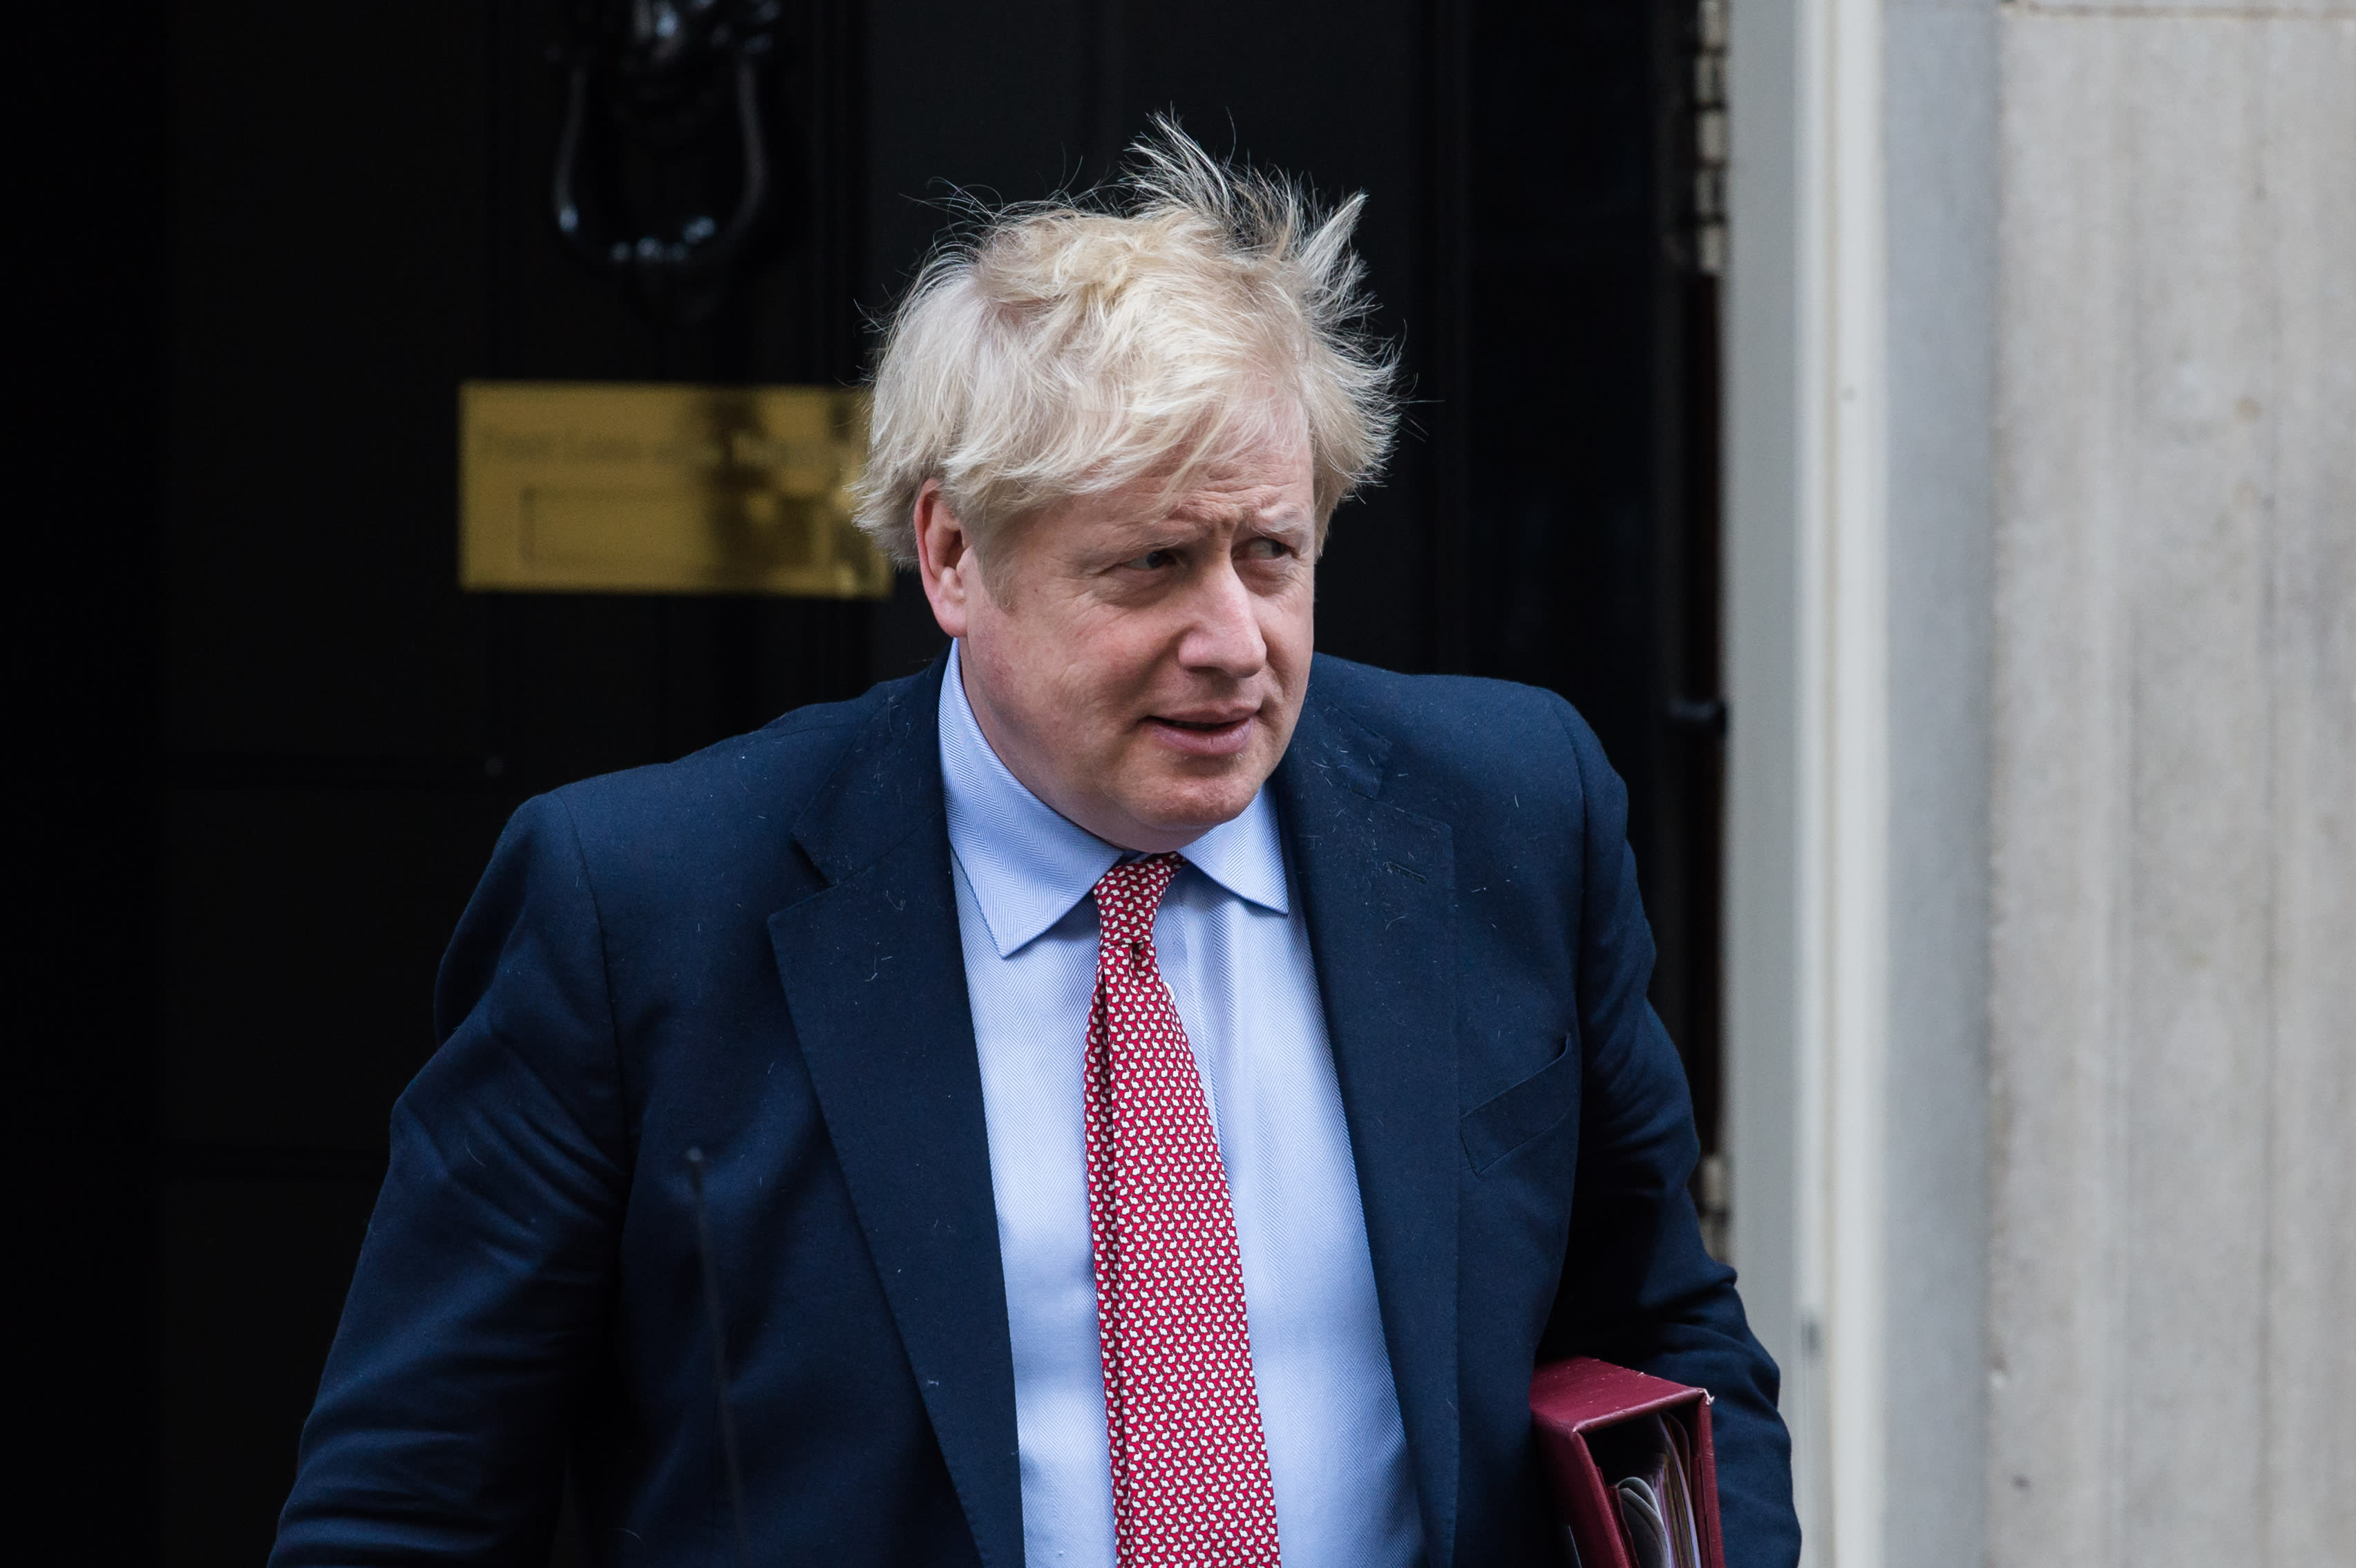 UK Prime Minister Boris Johnson discharged from hospital